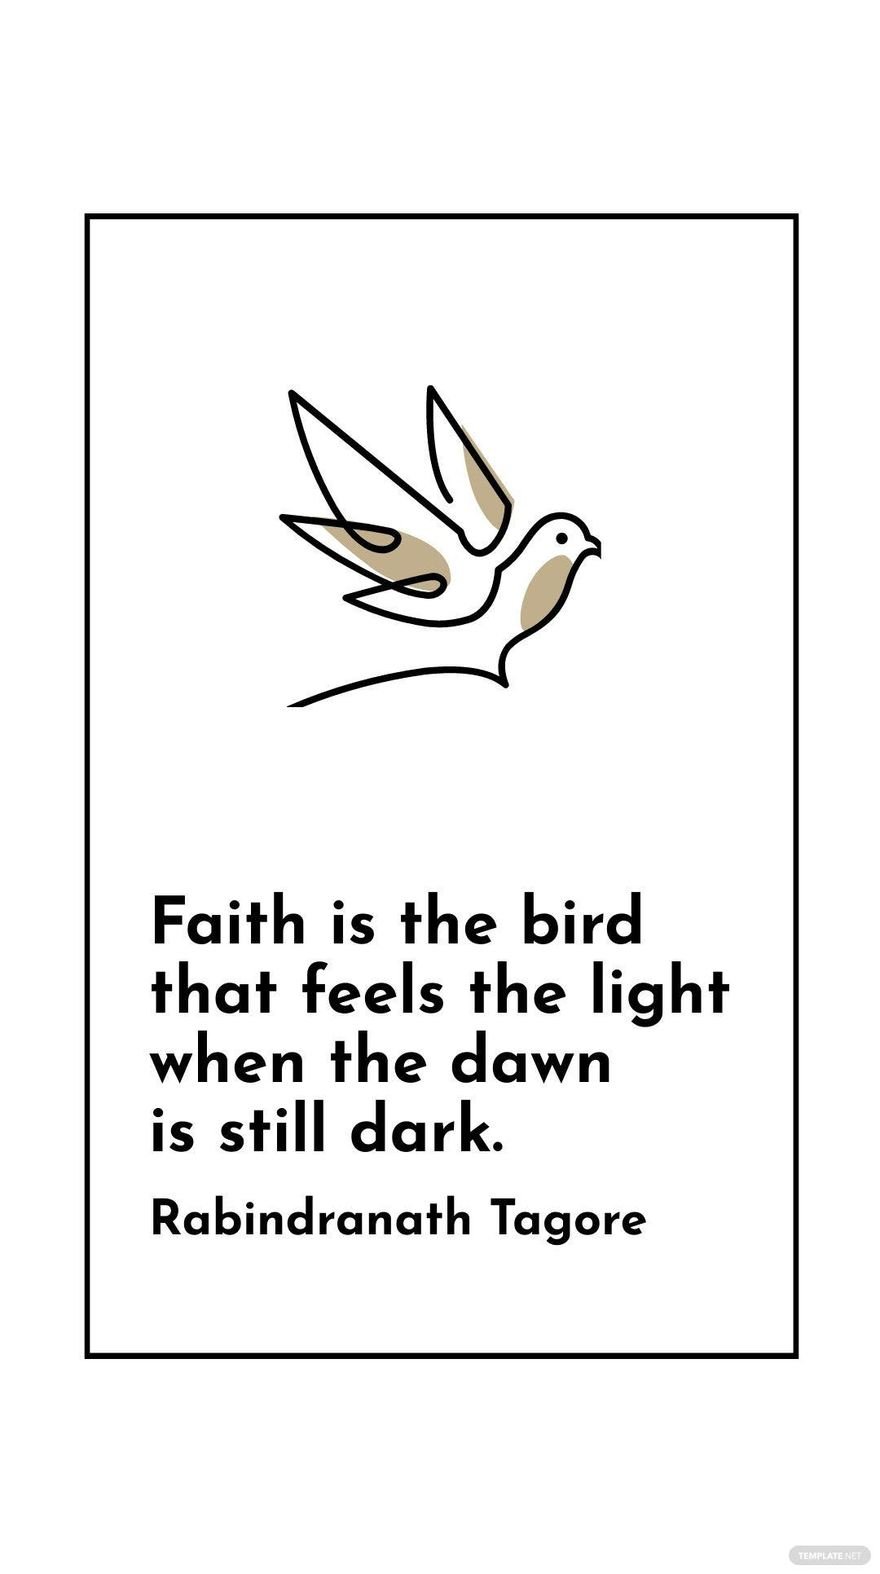 Free Rabindranath Tagore - Faith is the bird that feels the light when the dawn is still dark. in JPG